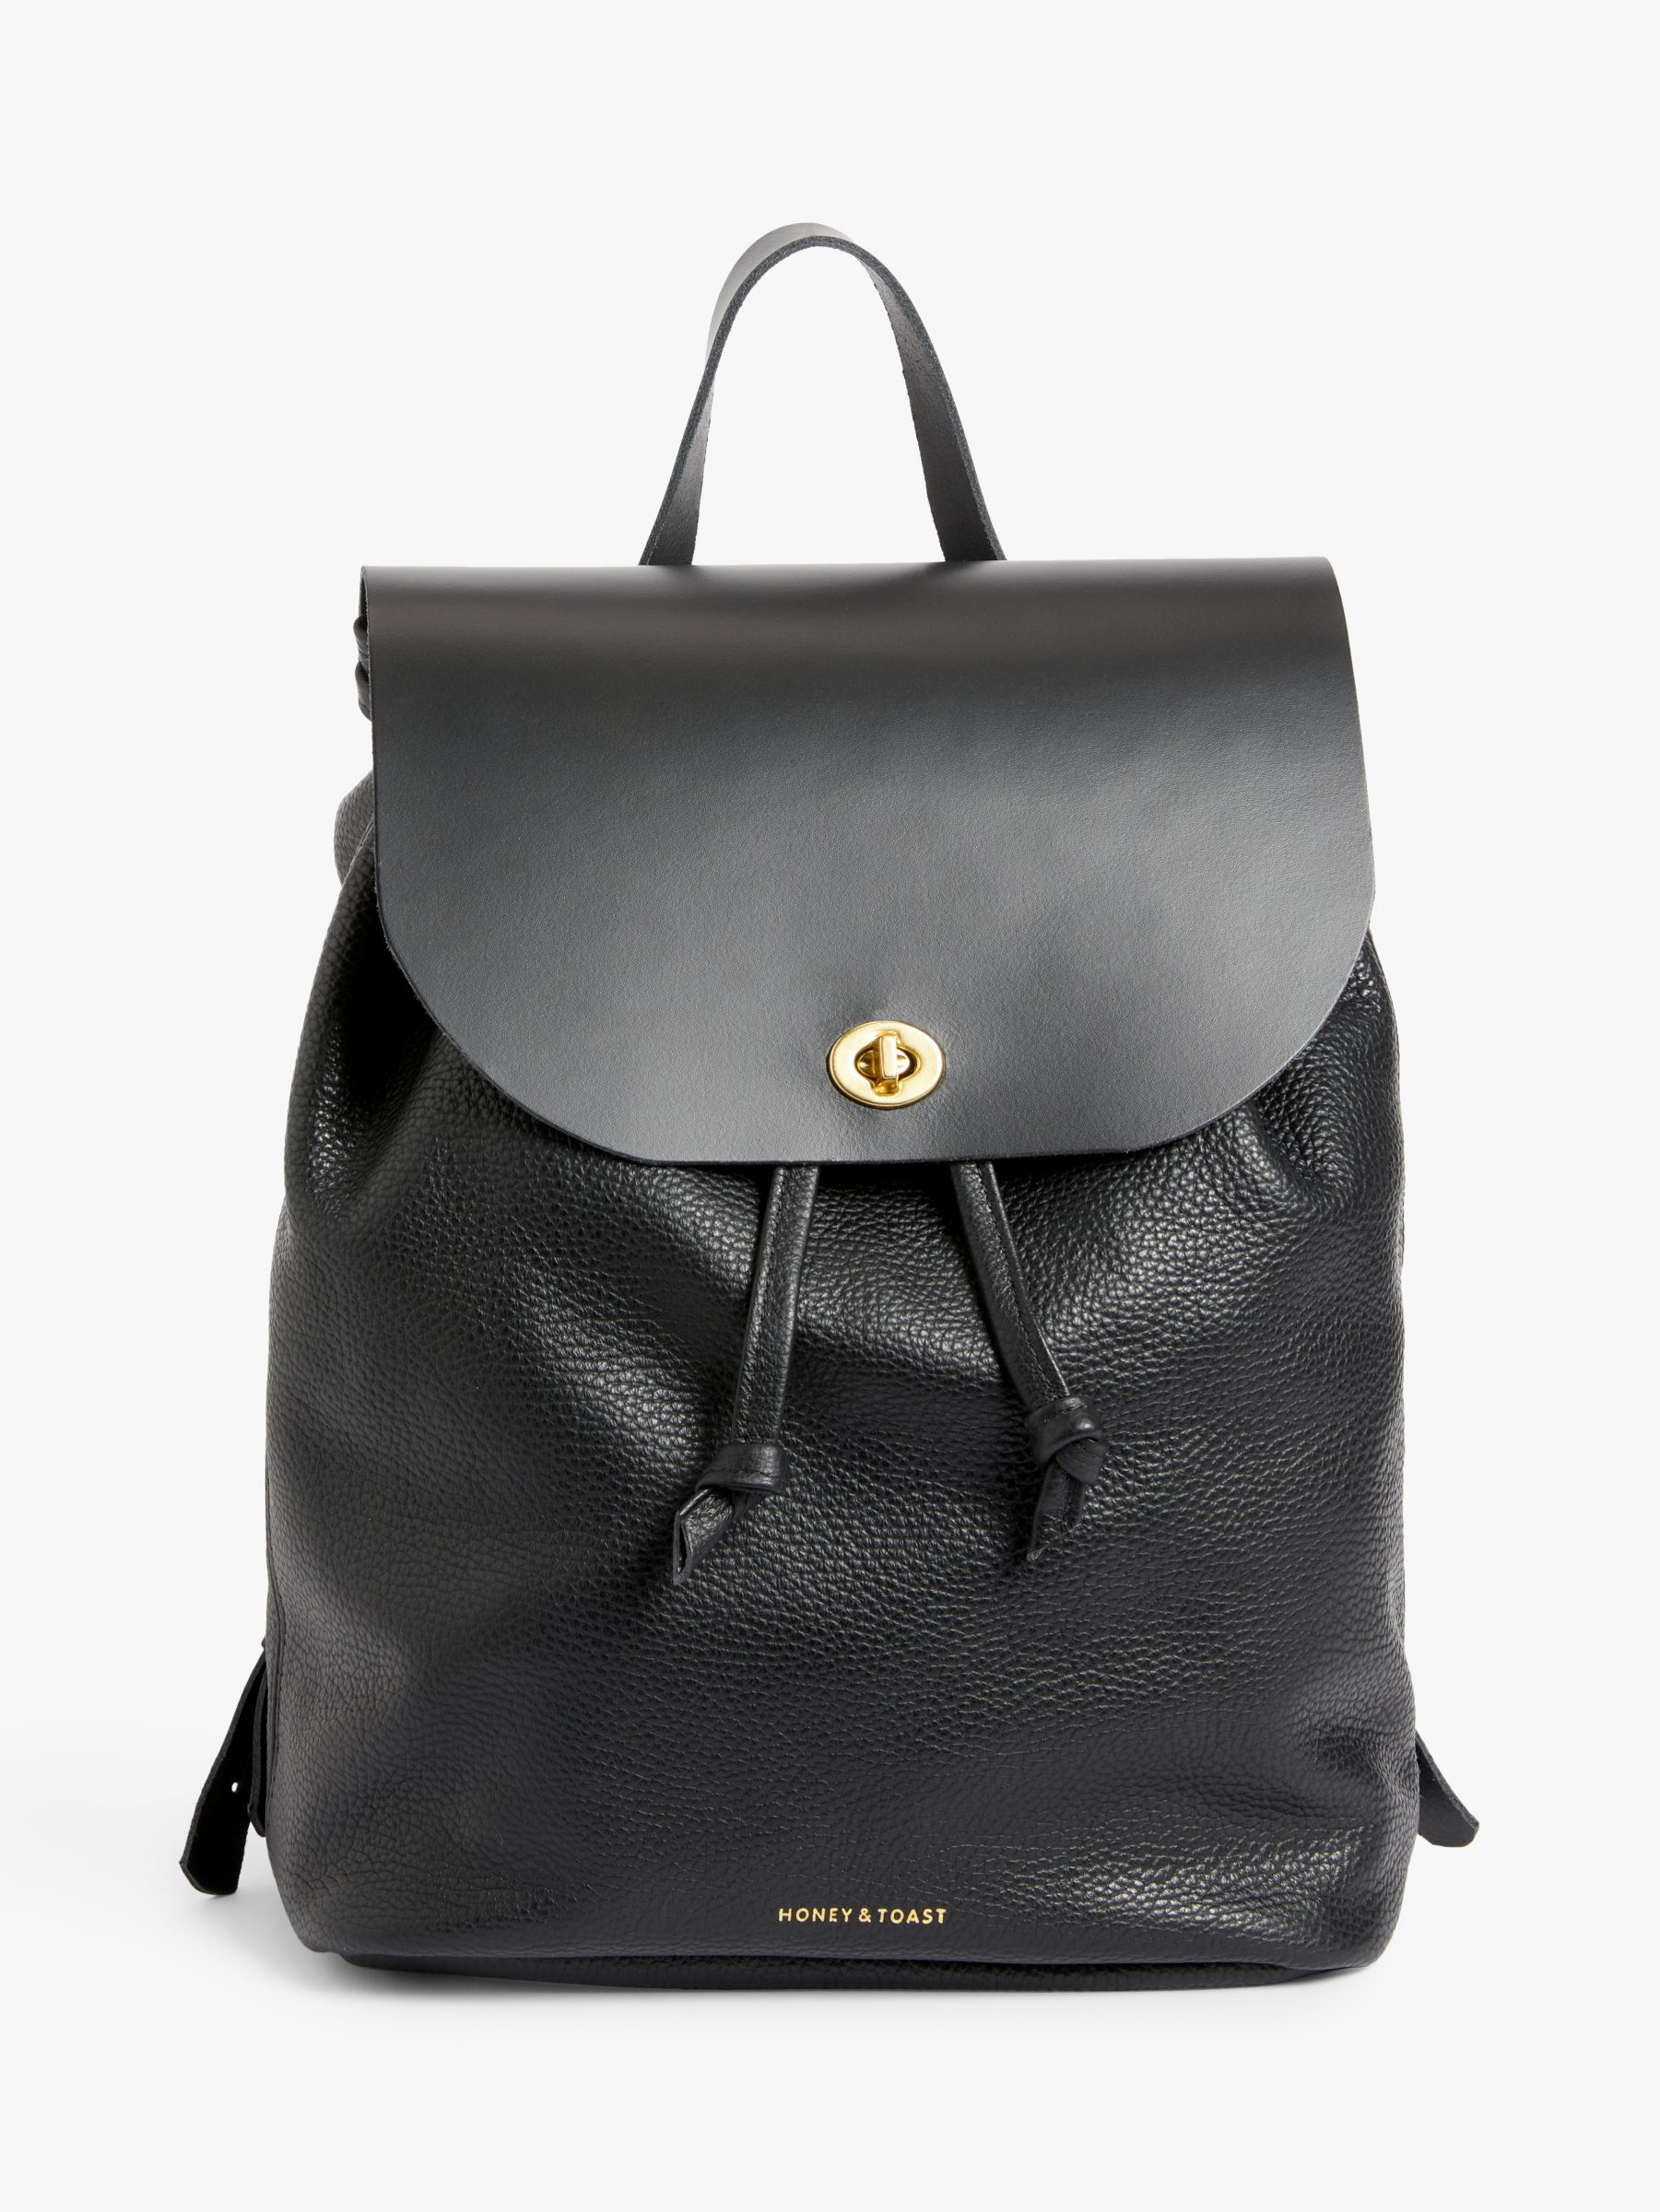 Honey & Toast Nancy Leather Backpack, Black at John Lewis & Partners